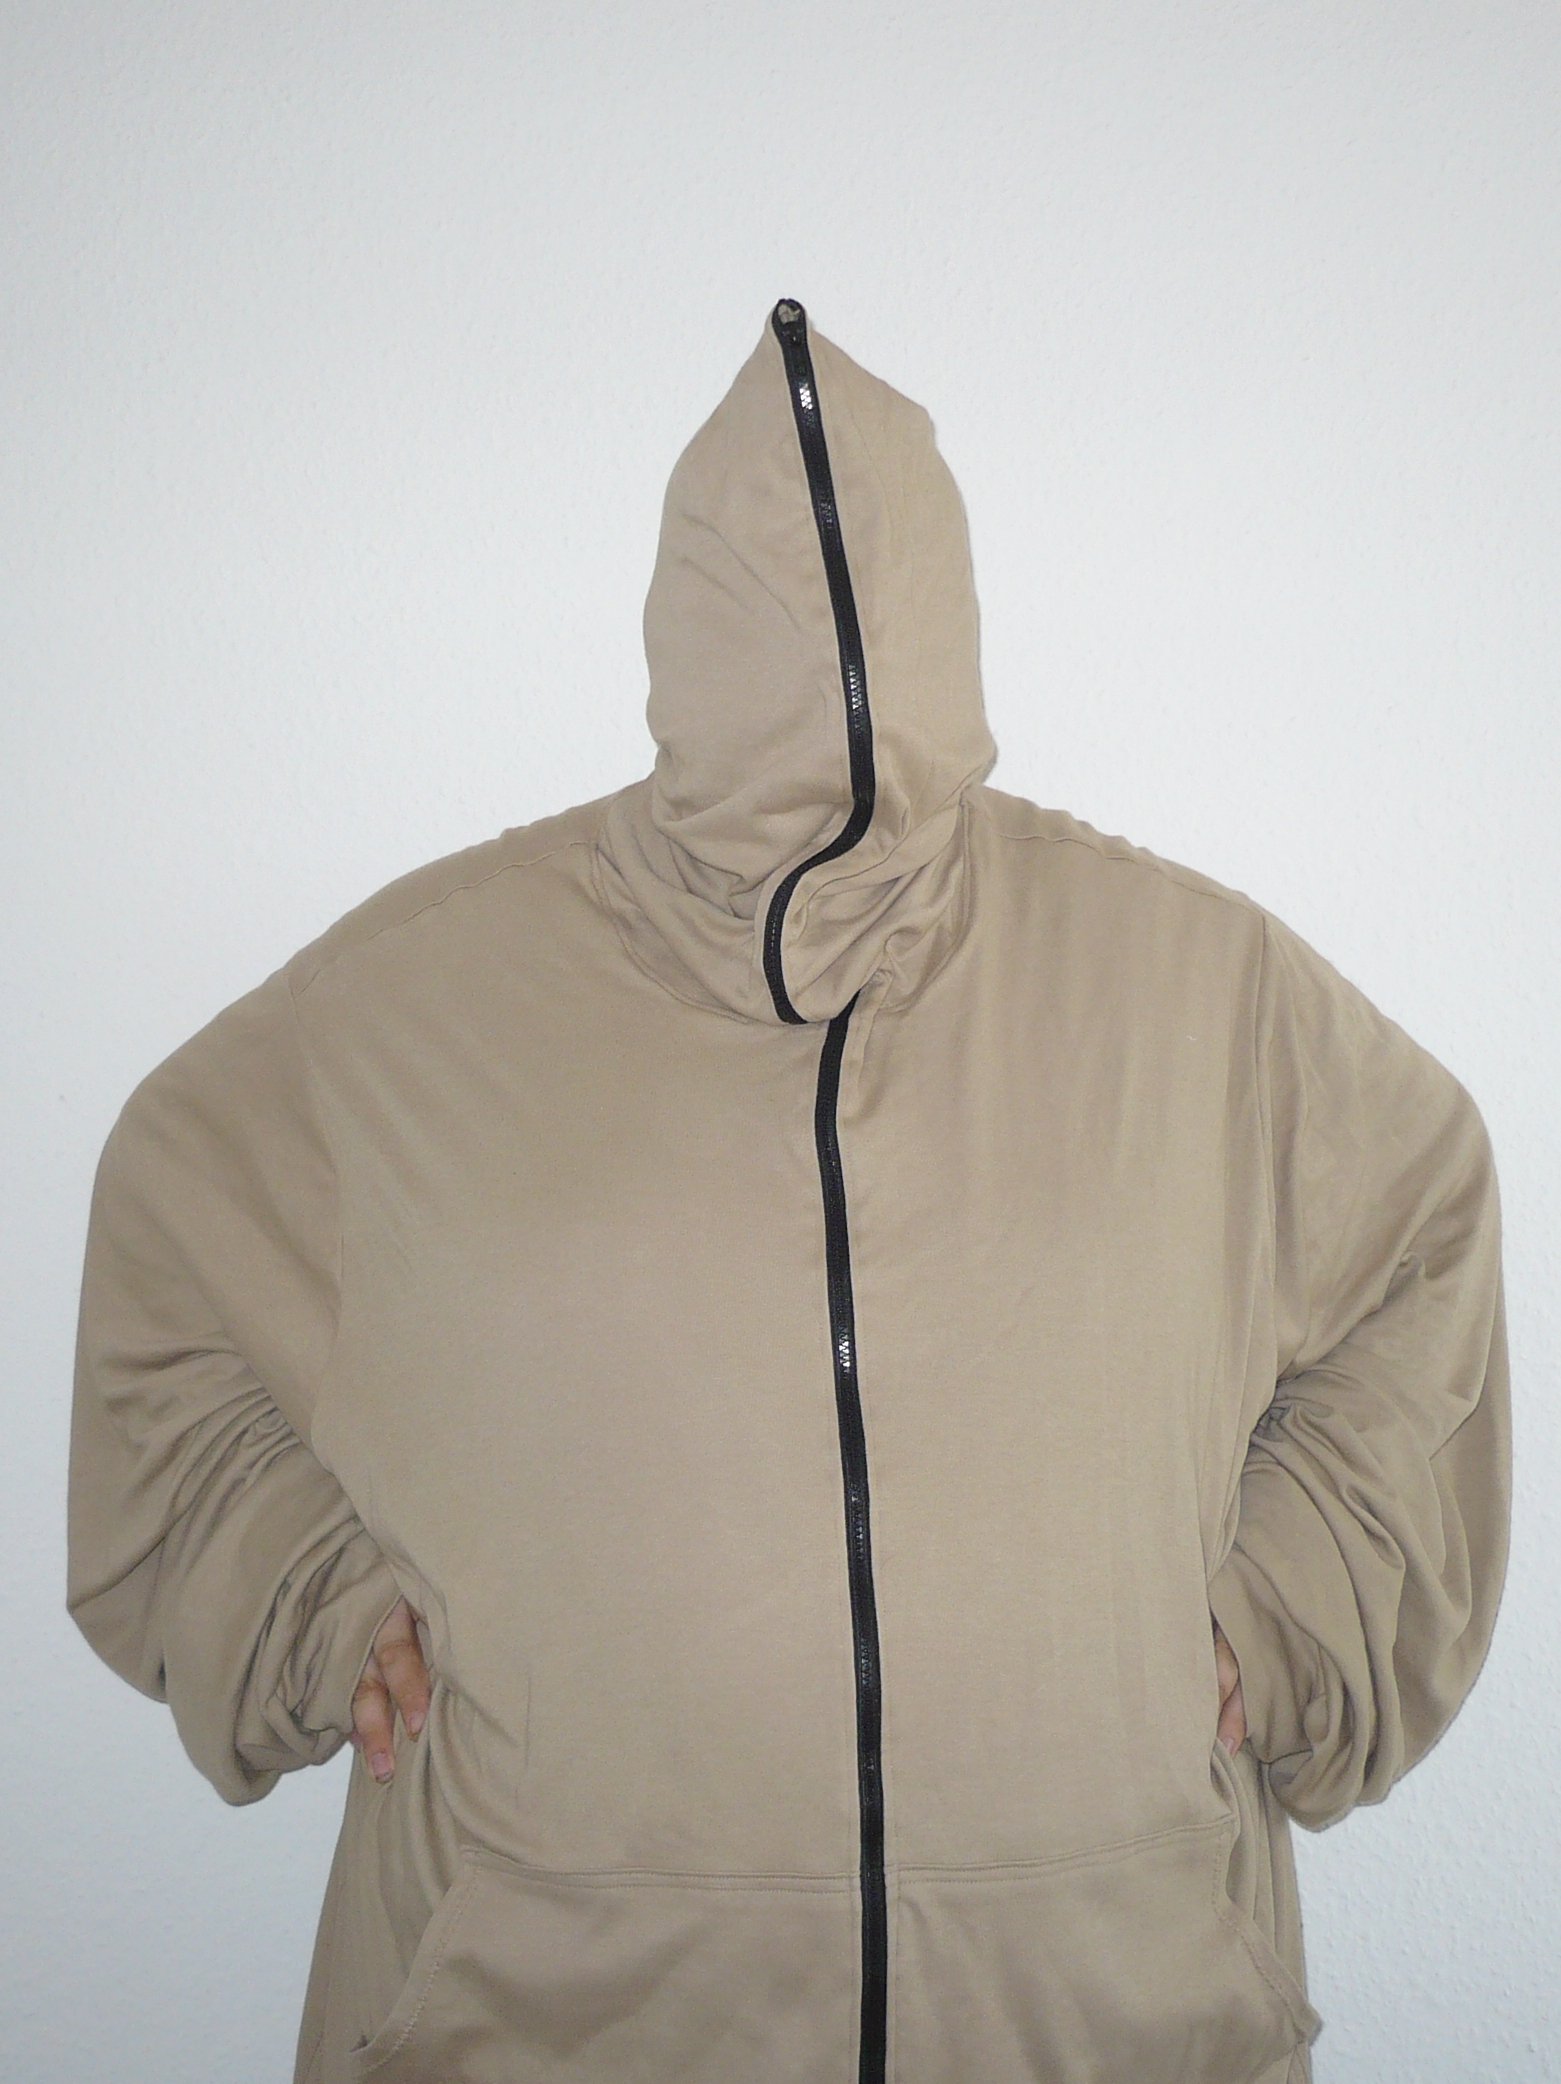 Custom full zipped hoodie from Bentham Sports